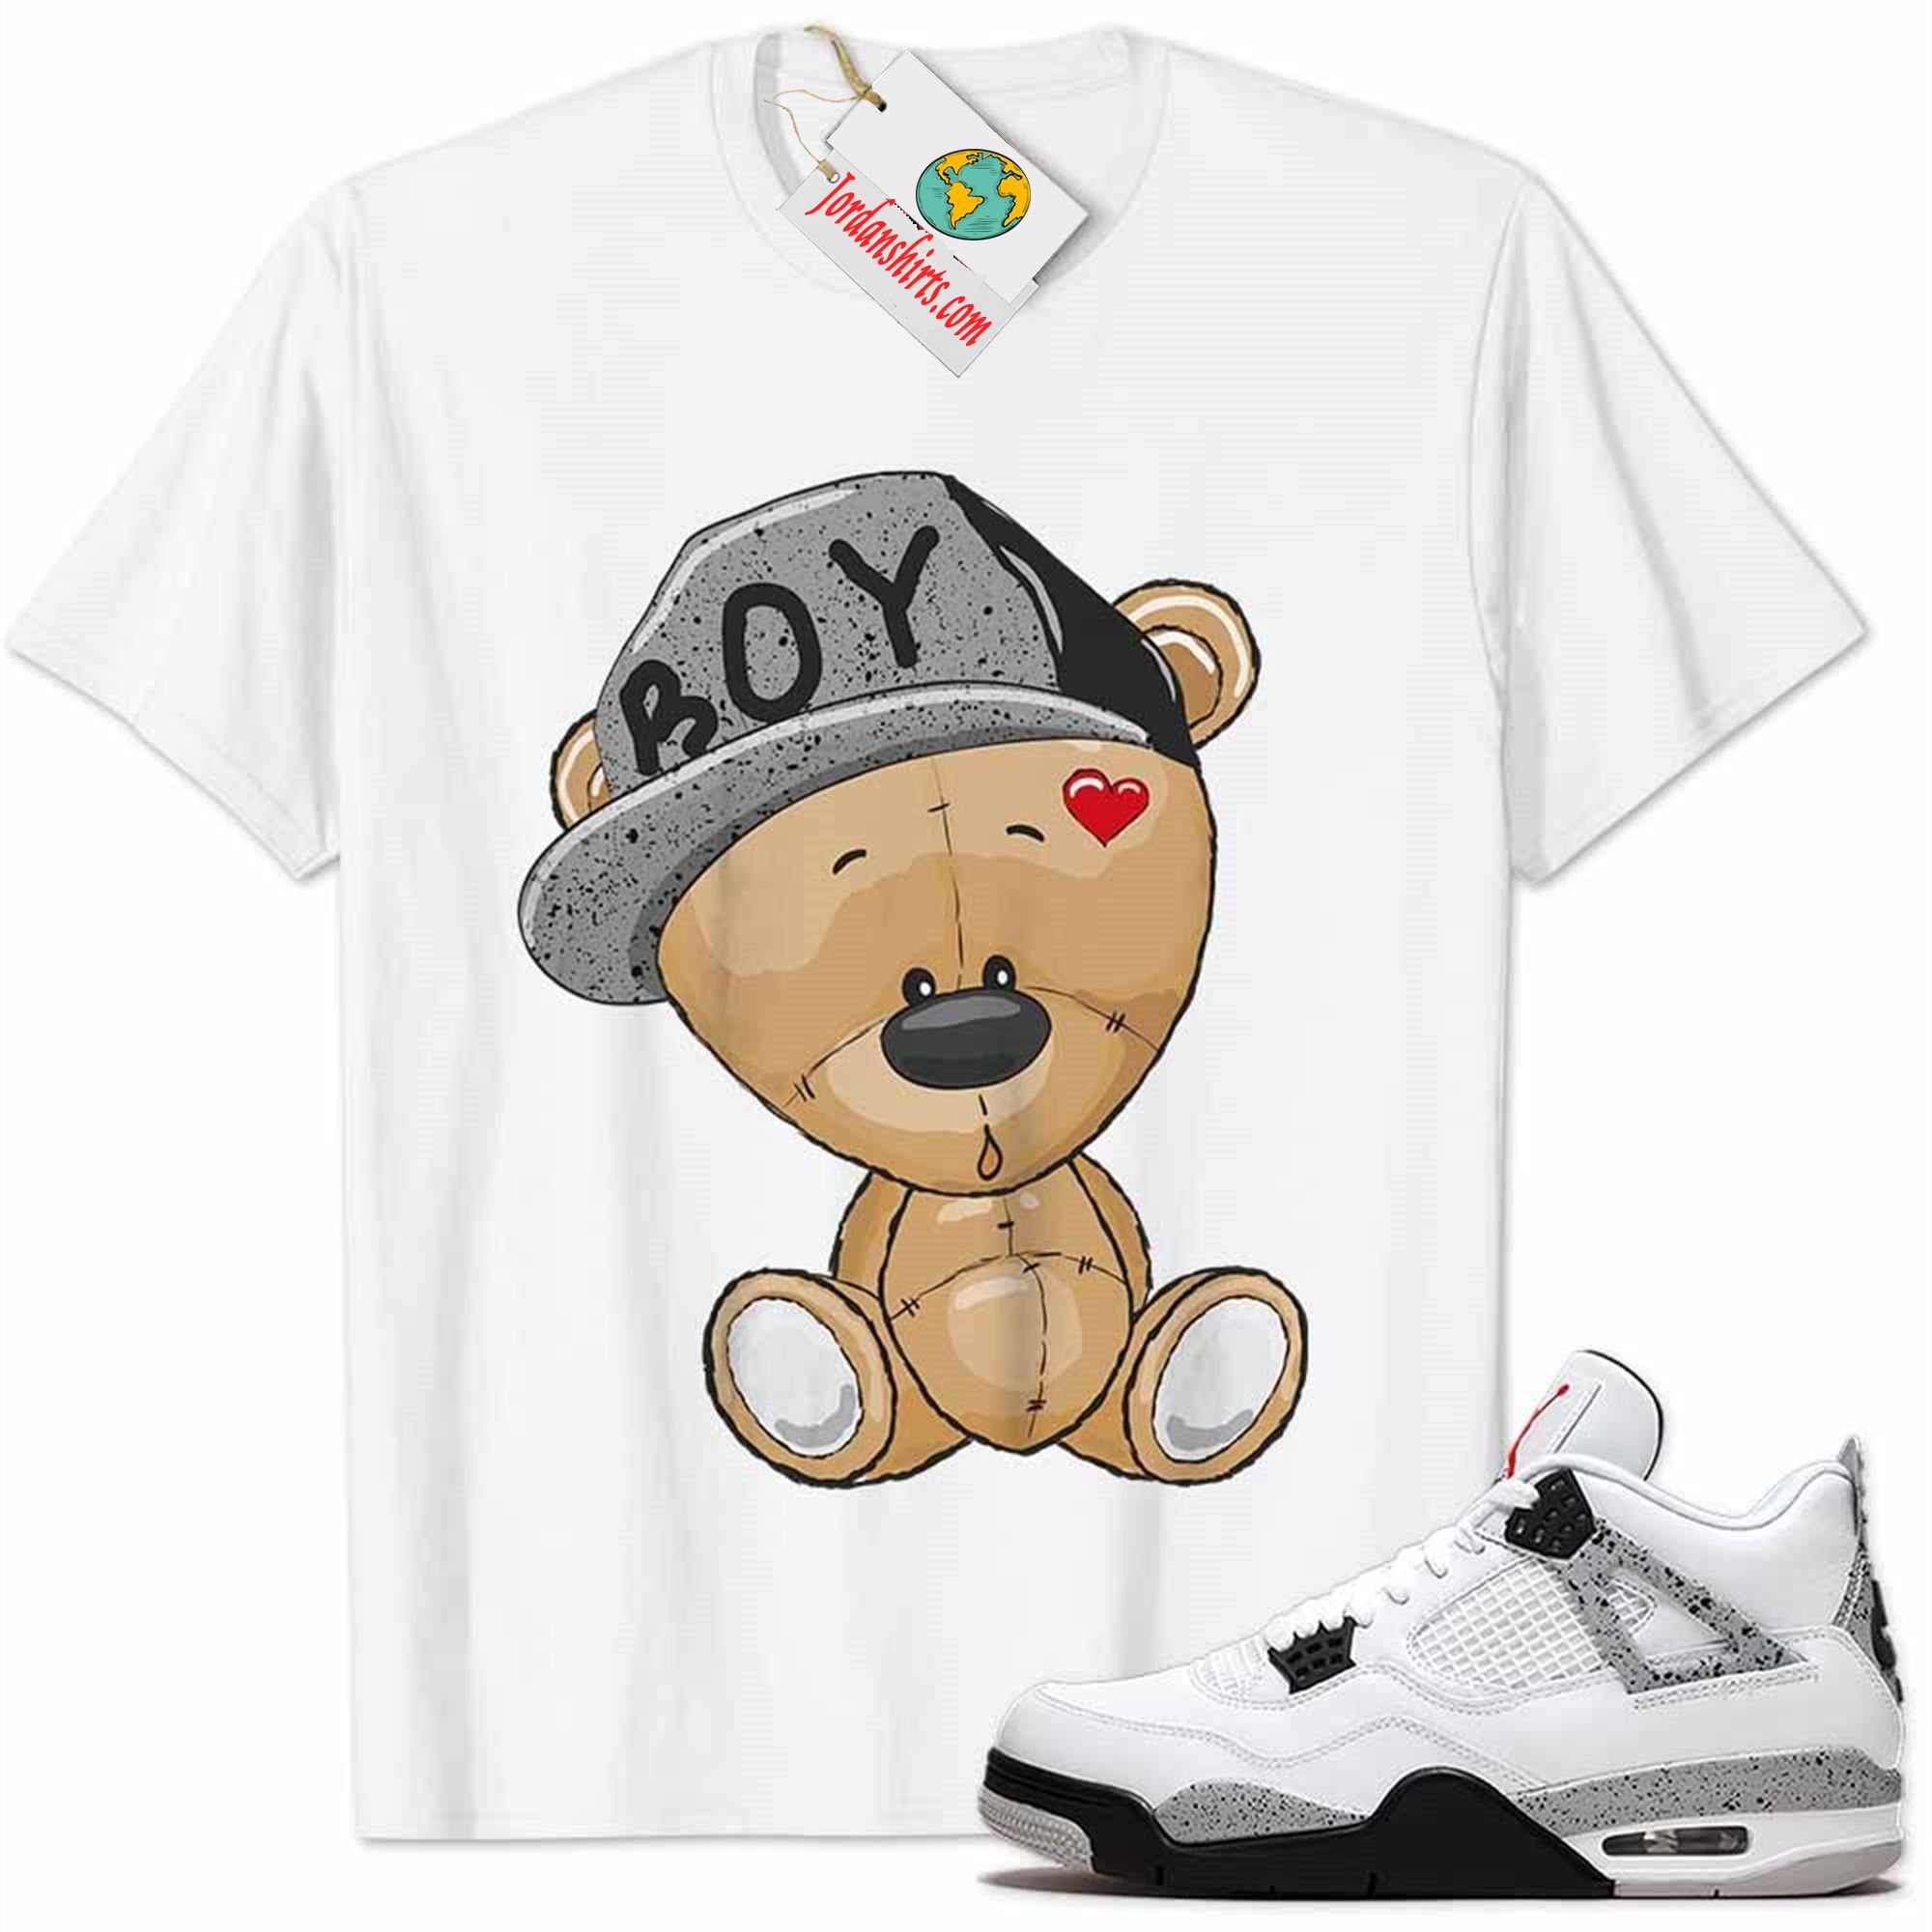 Jordan 4 Shirt, Jordan 4 Cement Shirt Cute Baby Teddy Bear White Size Up To 5xl